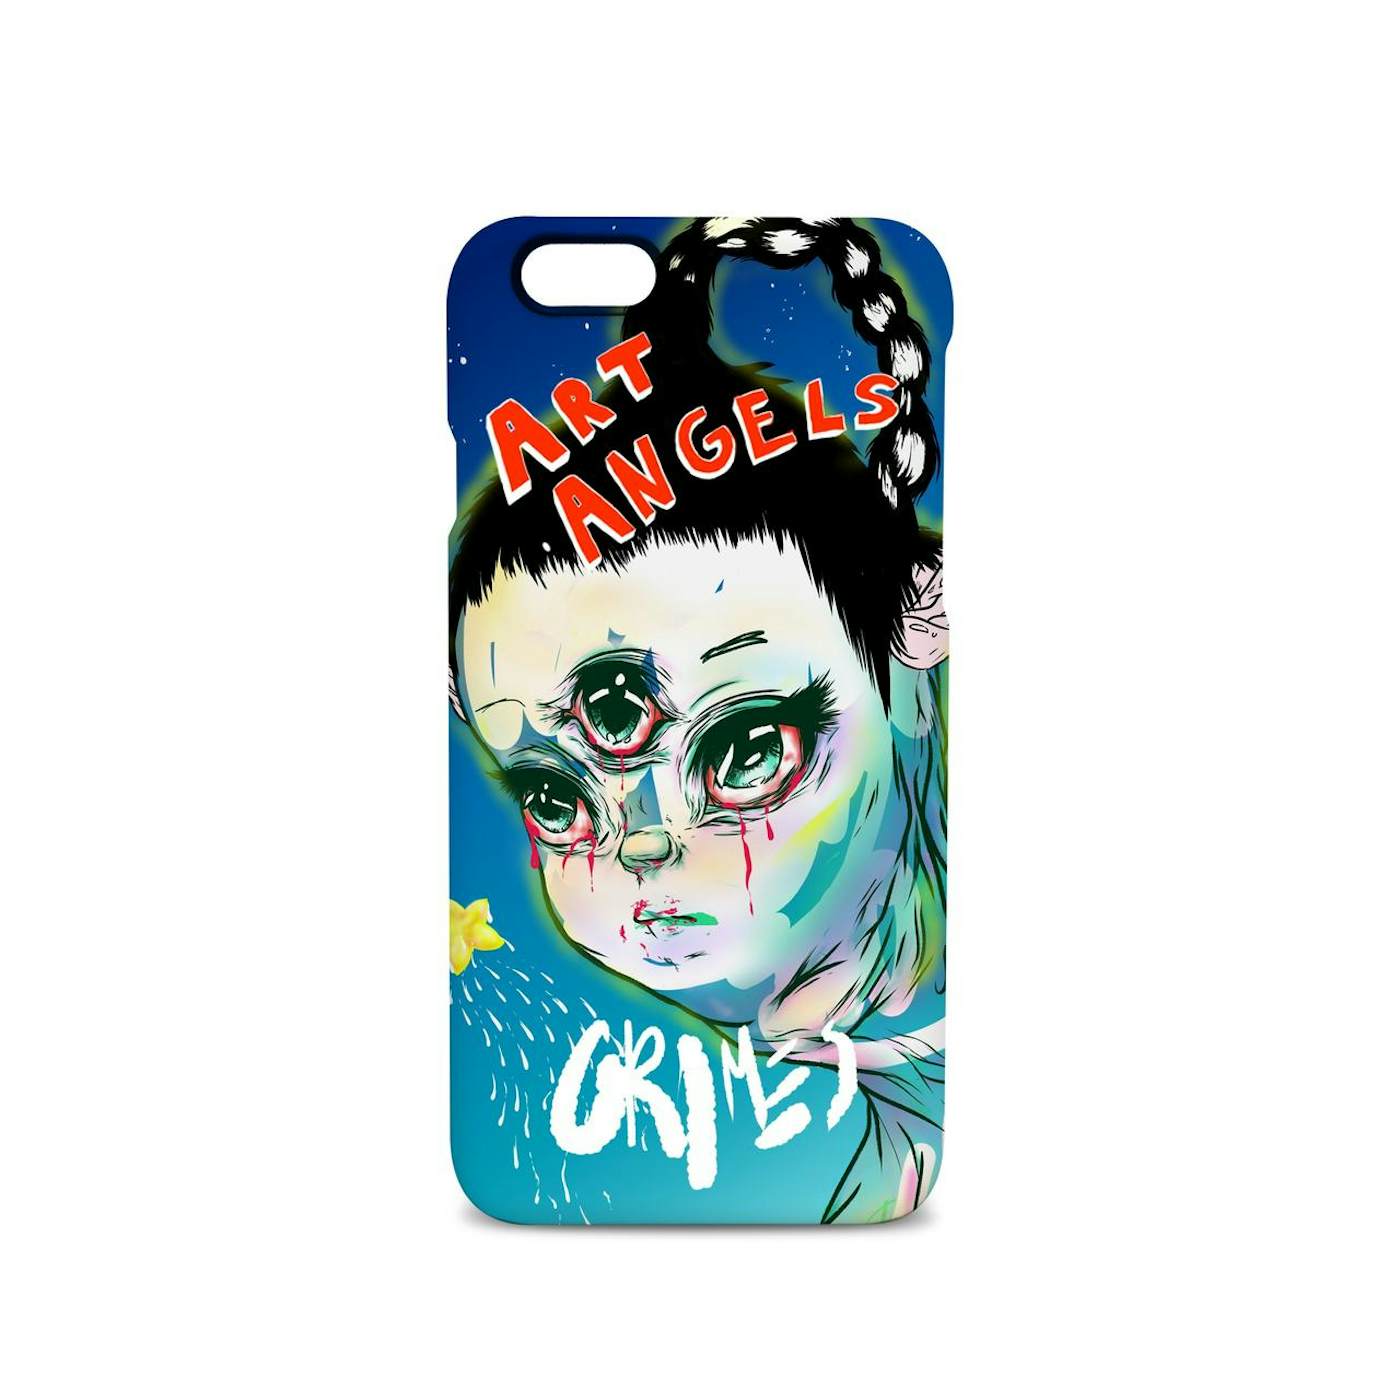 Grimes Art Angeles 3 iPhone Case